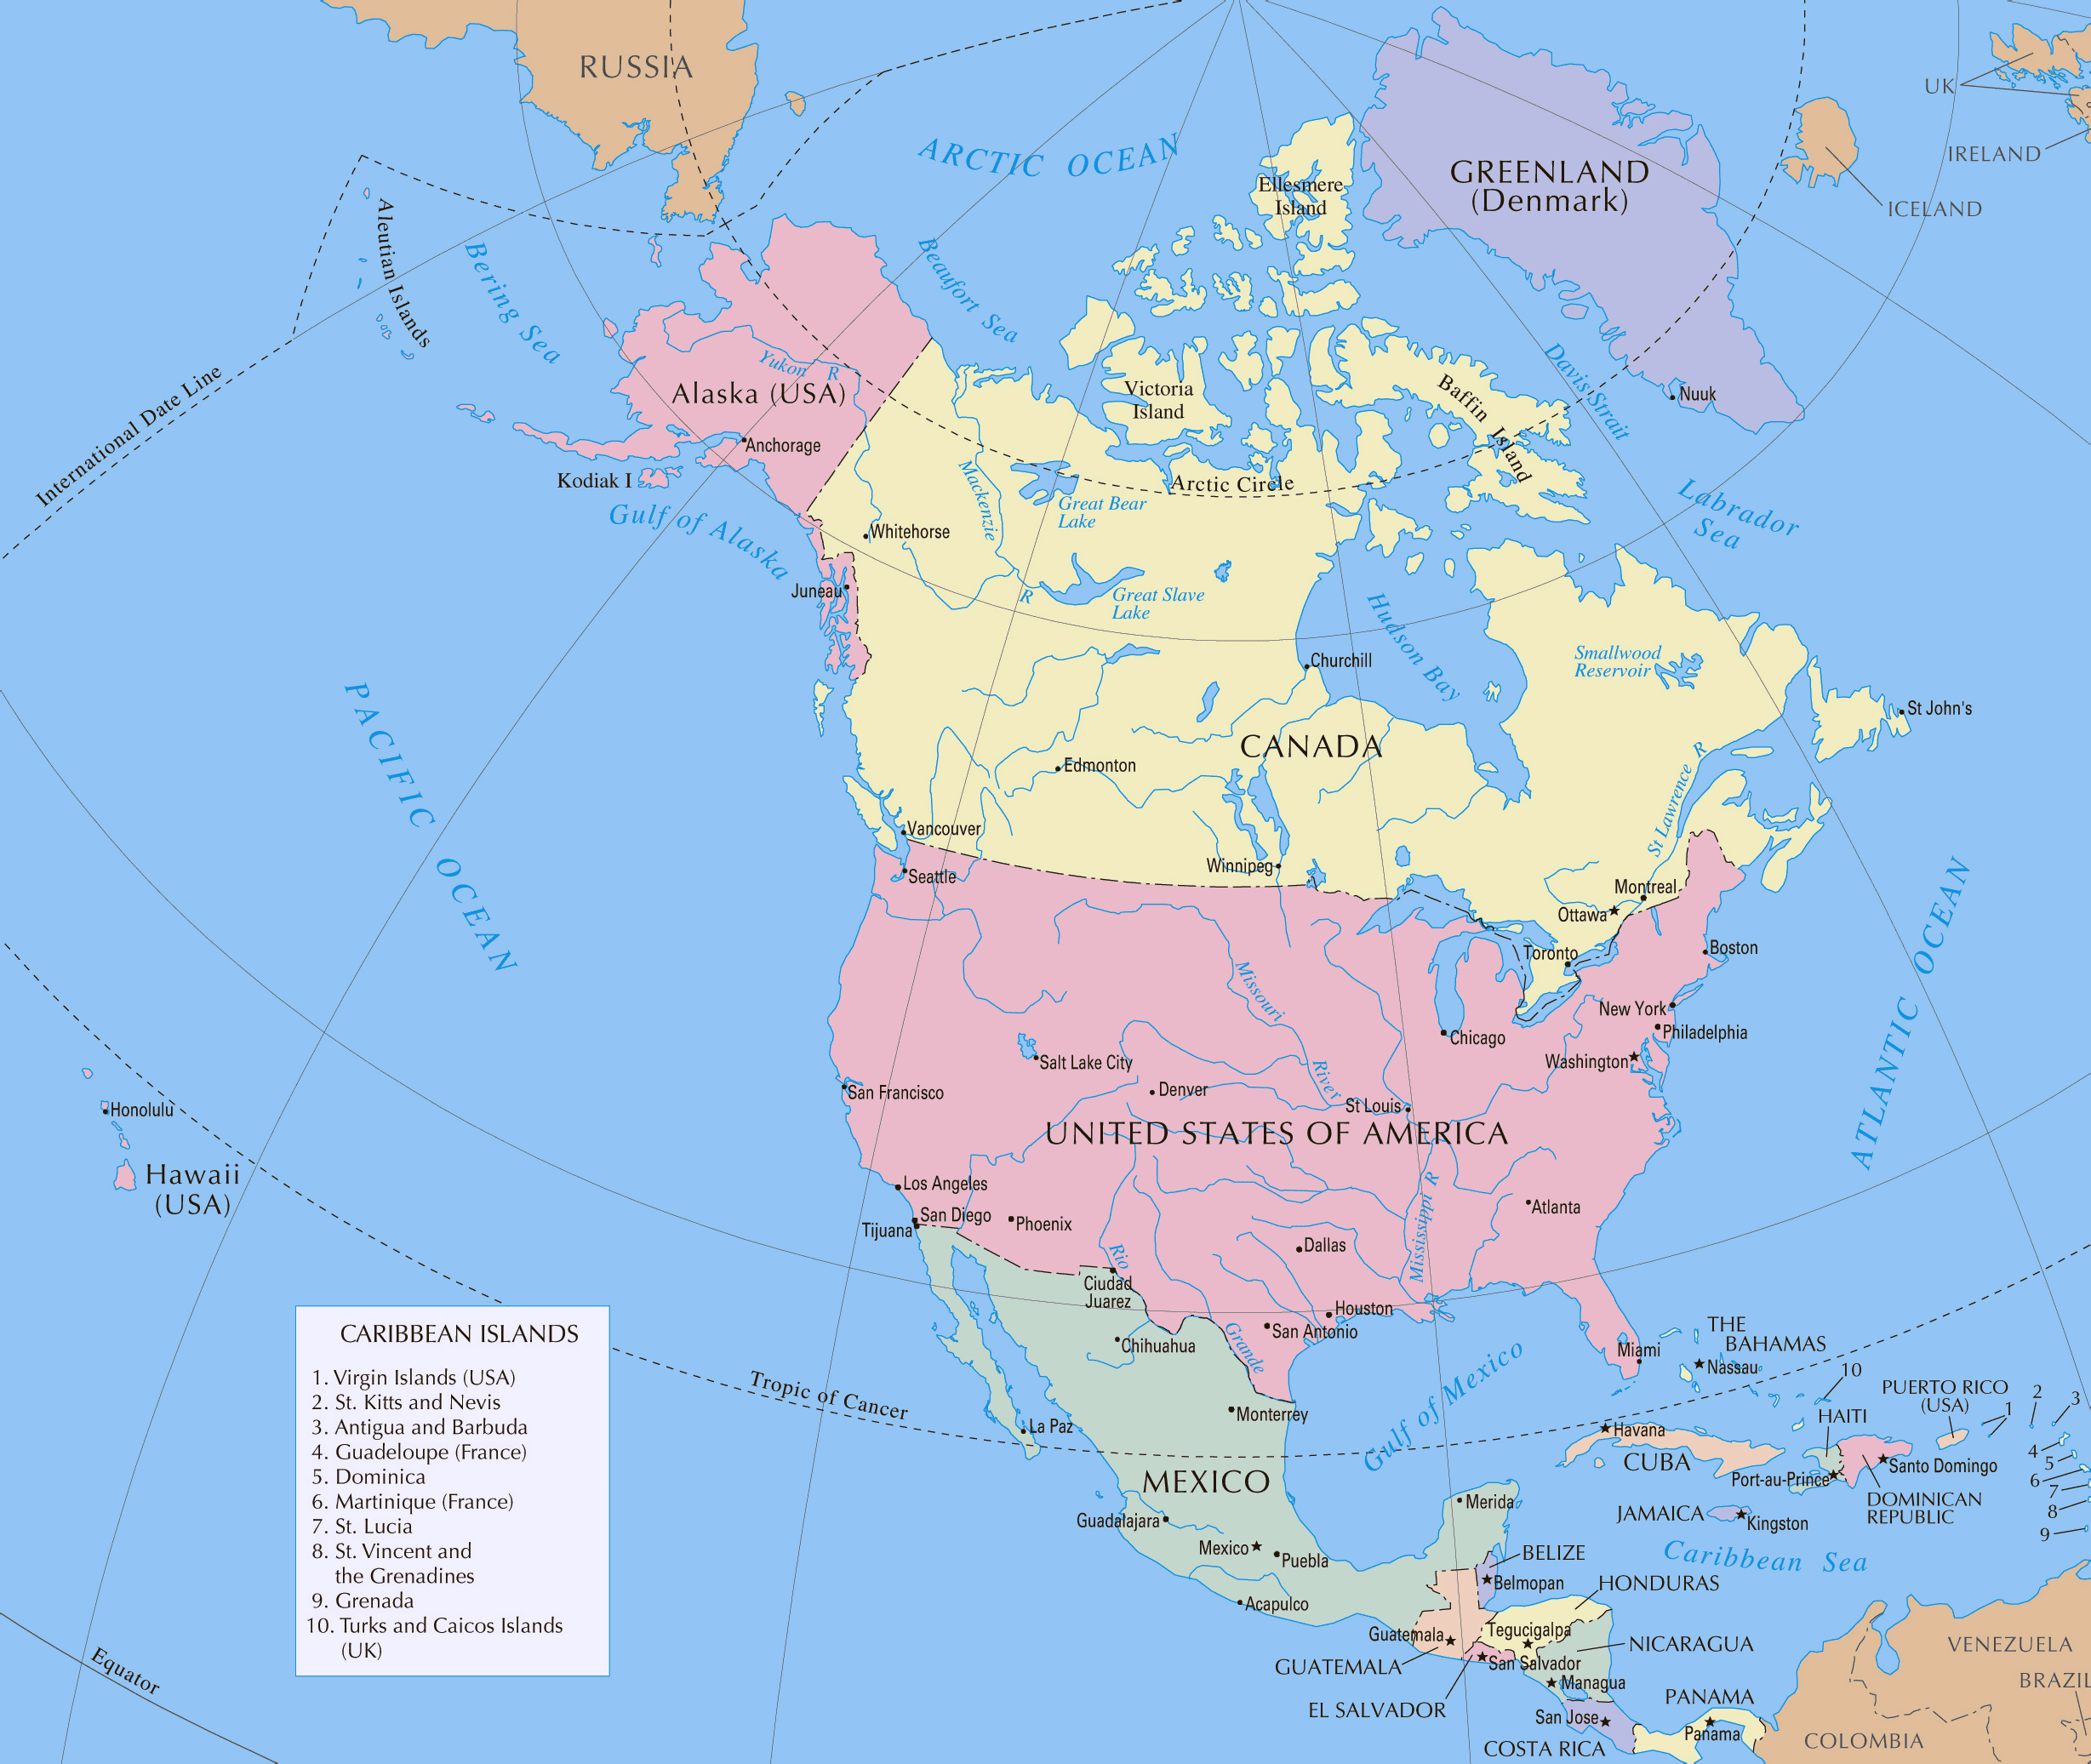 North America Wall Map